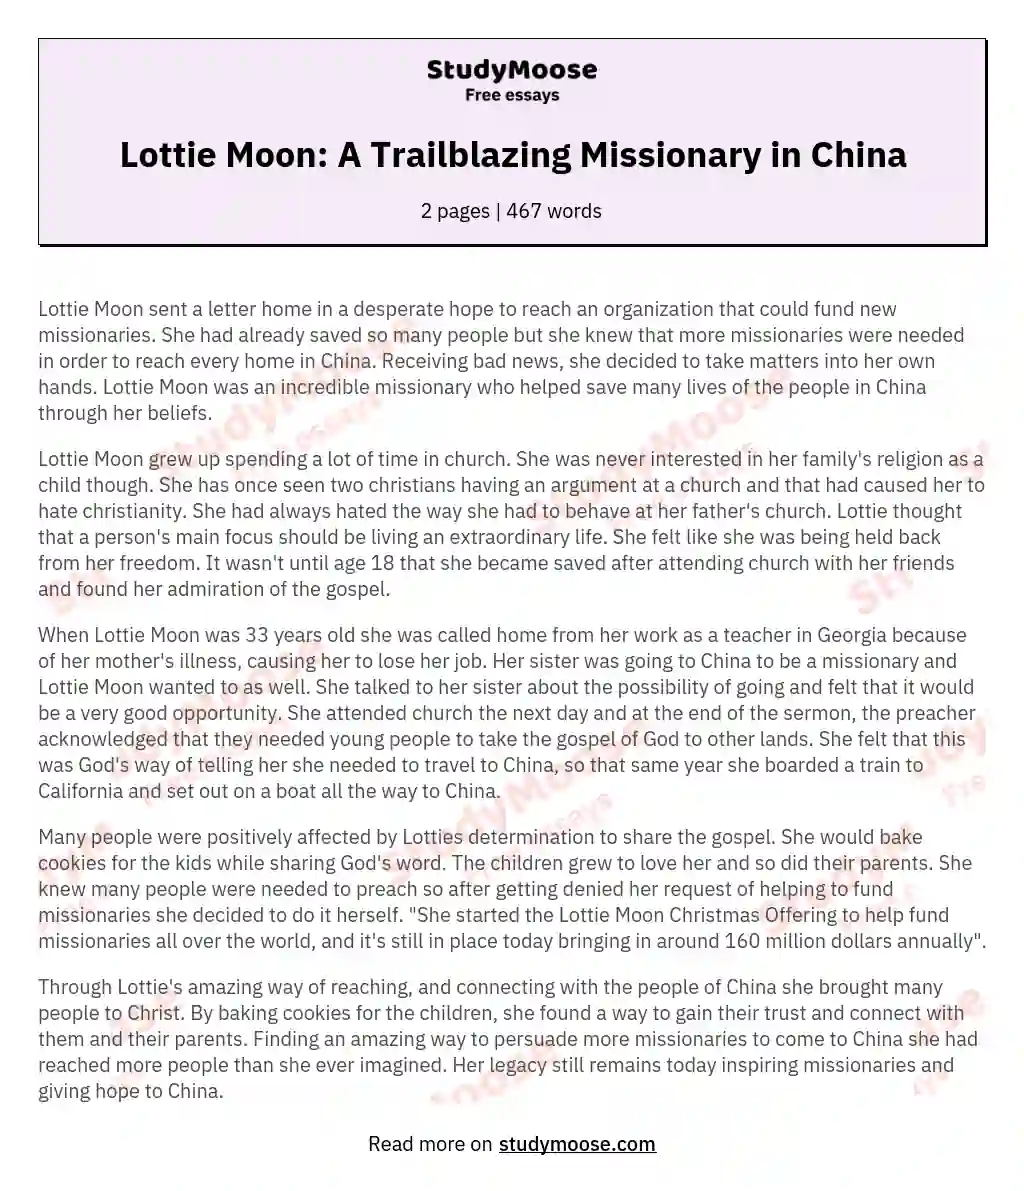 Lottie Moon: A Trailblazing Missionary in China essay